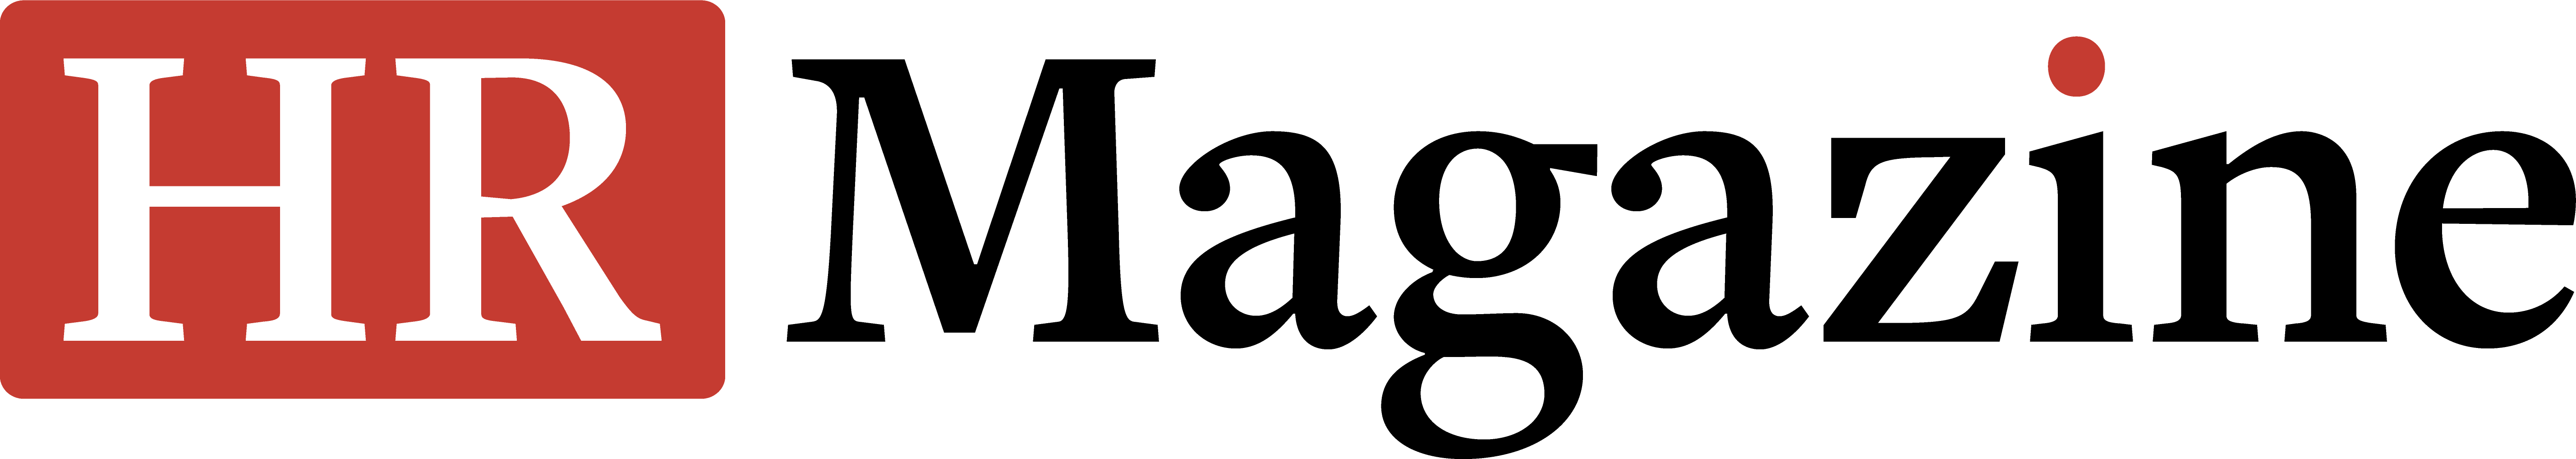 hrmagazine-logo-horizontal-color